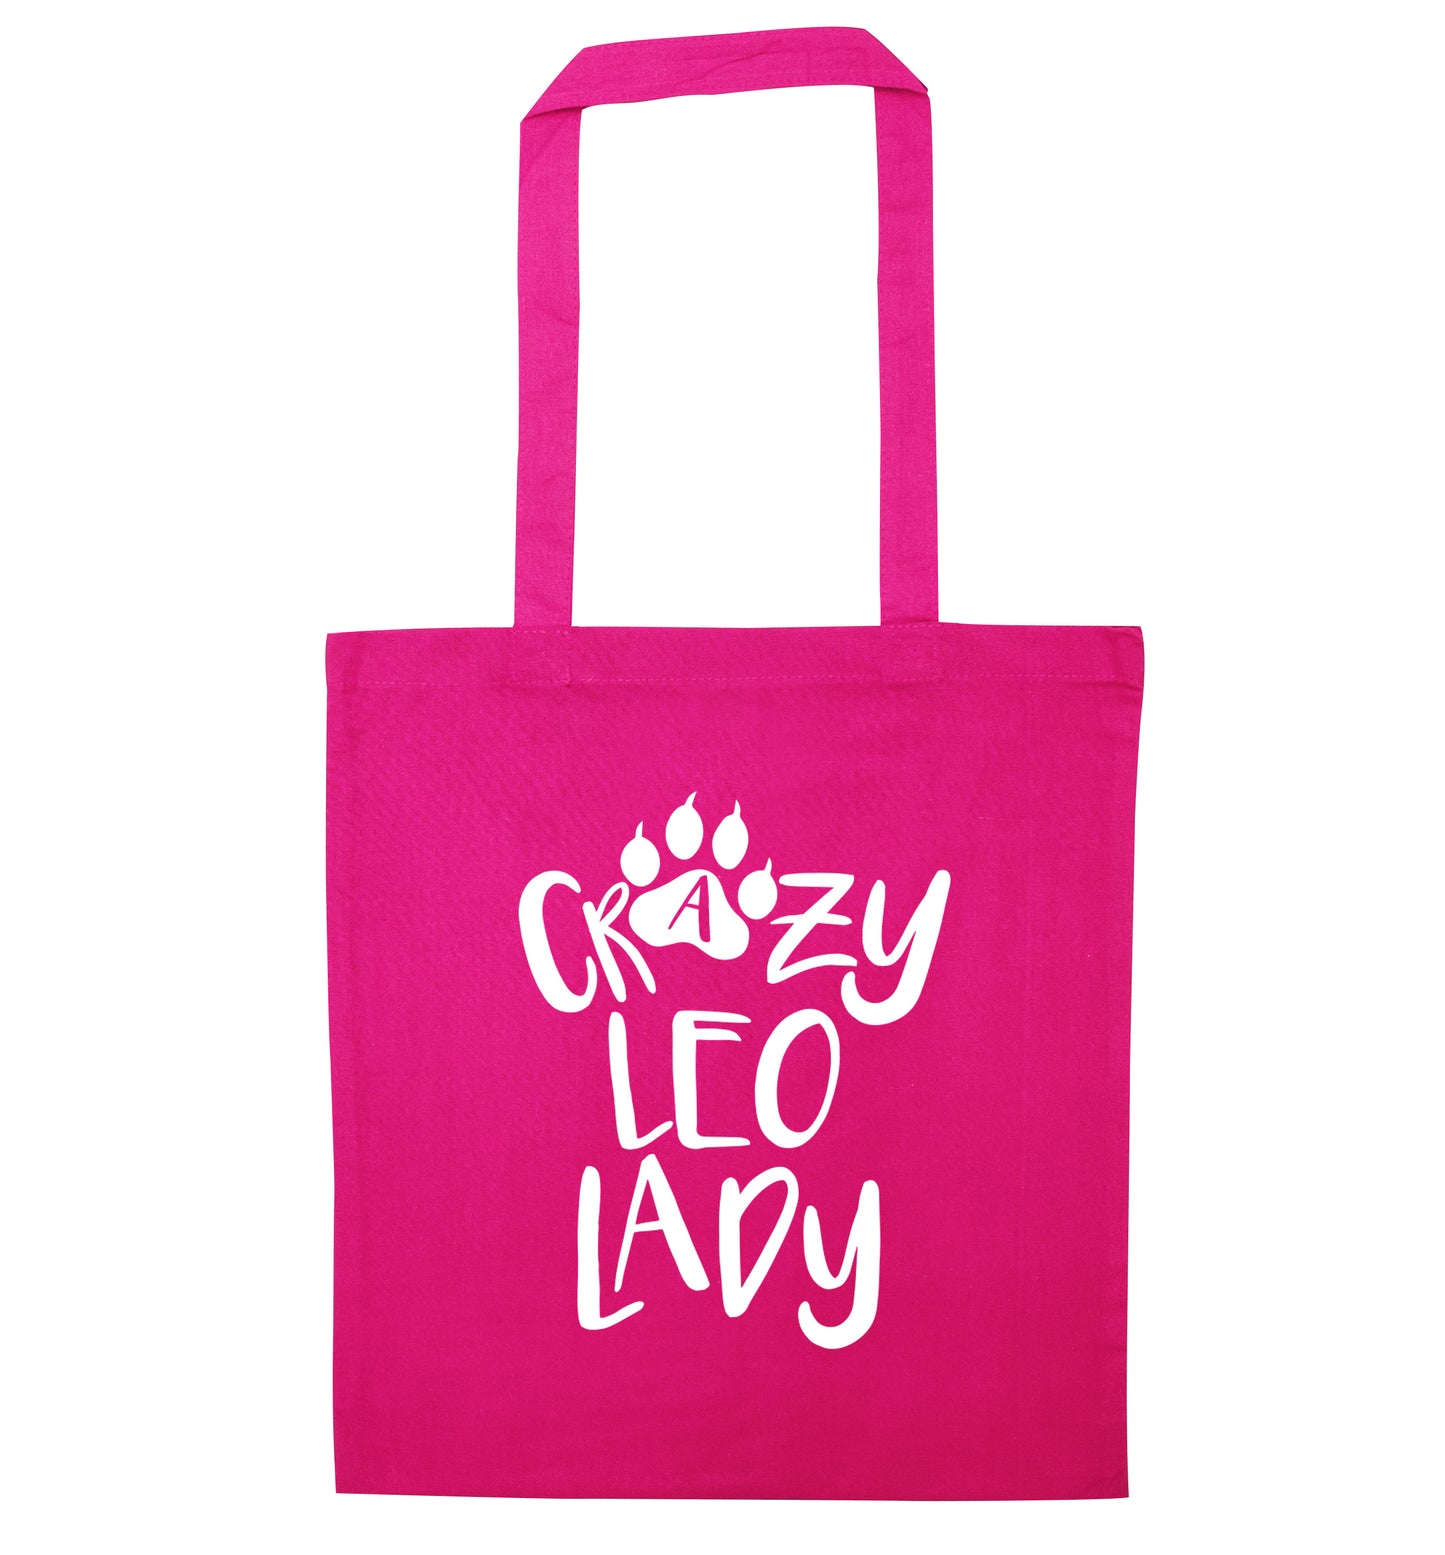 Crazy leo lady pink tote bag